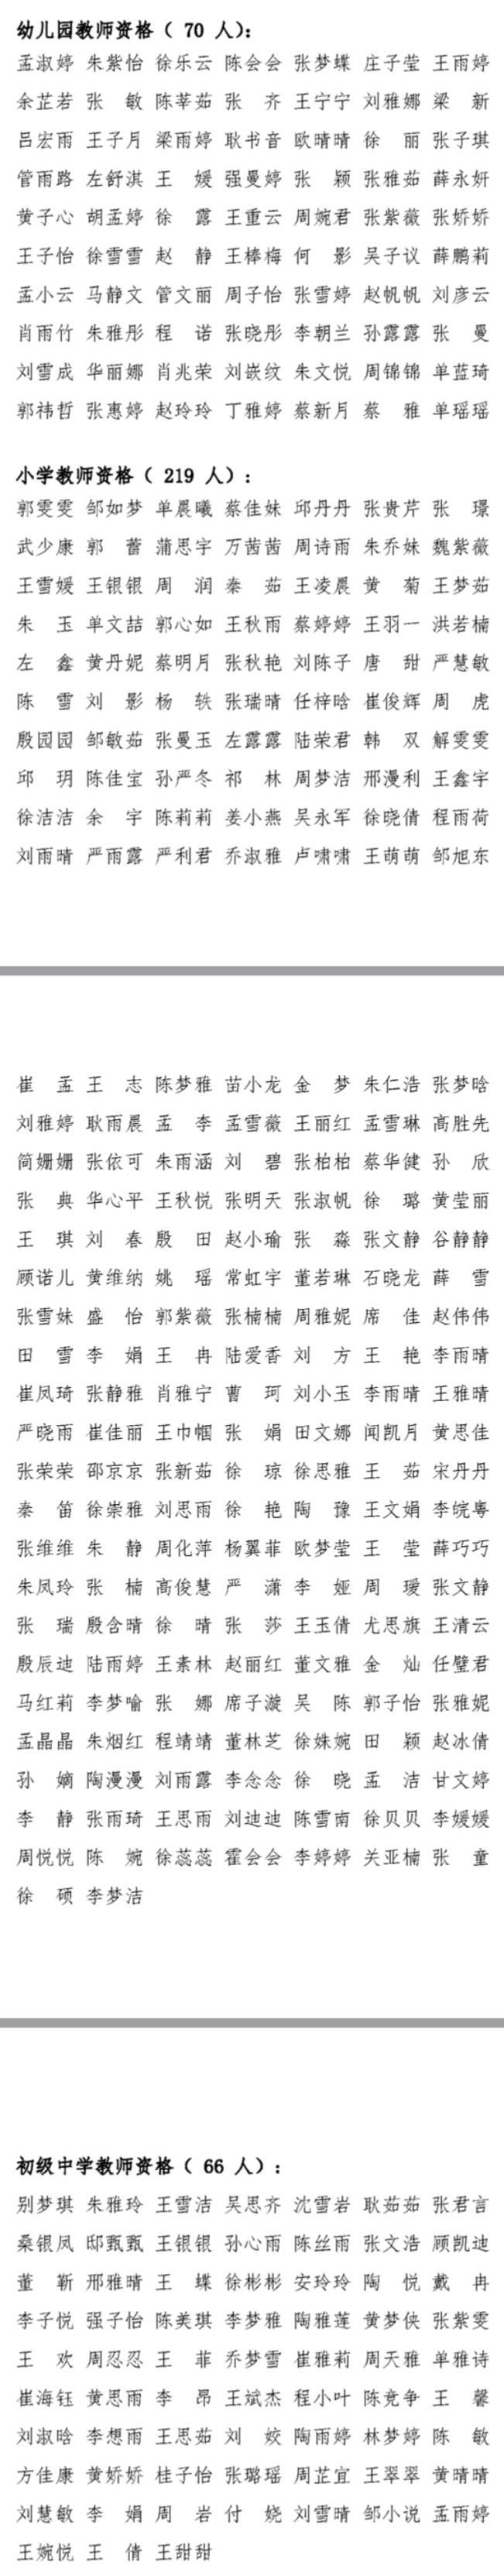 FireShot Capture 033 - 固镇县2022年上半年第二批教师资格认定拟通过人员公示_固镇县人民政府 - www.guzhen.gov.cn.png